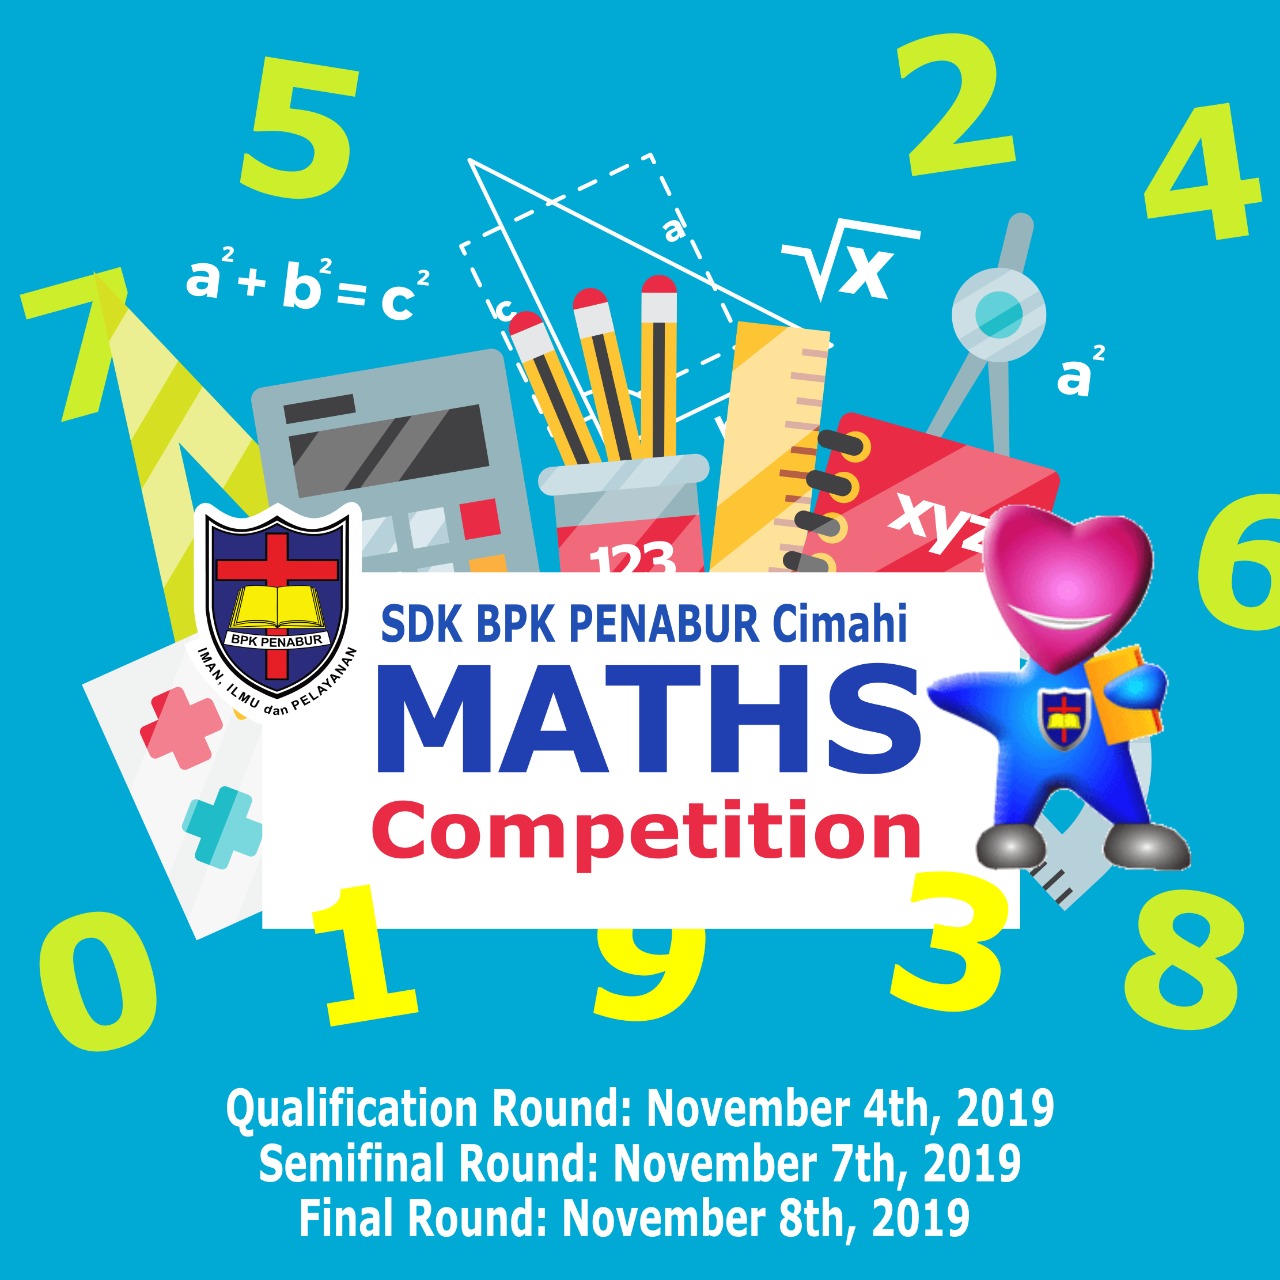 Maths Competition SDK BPK PENABUR Cimahi